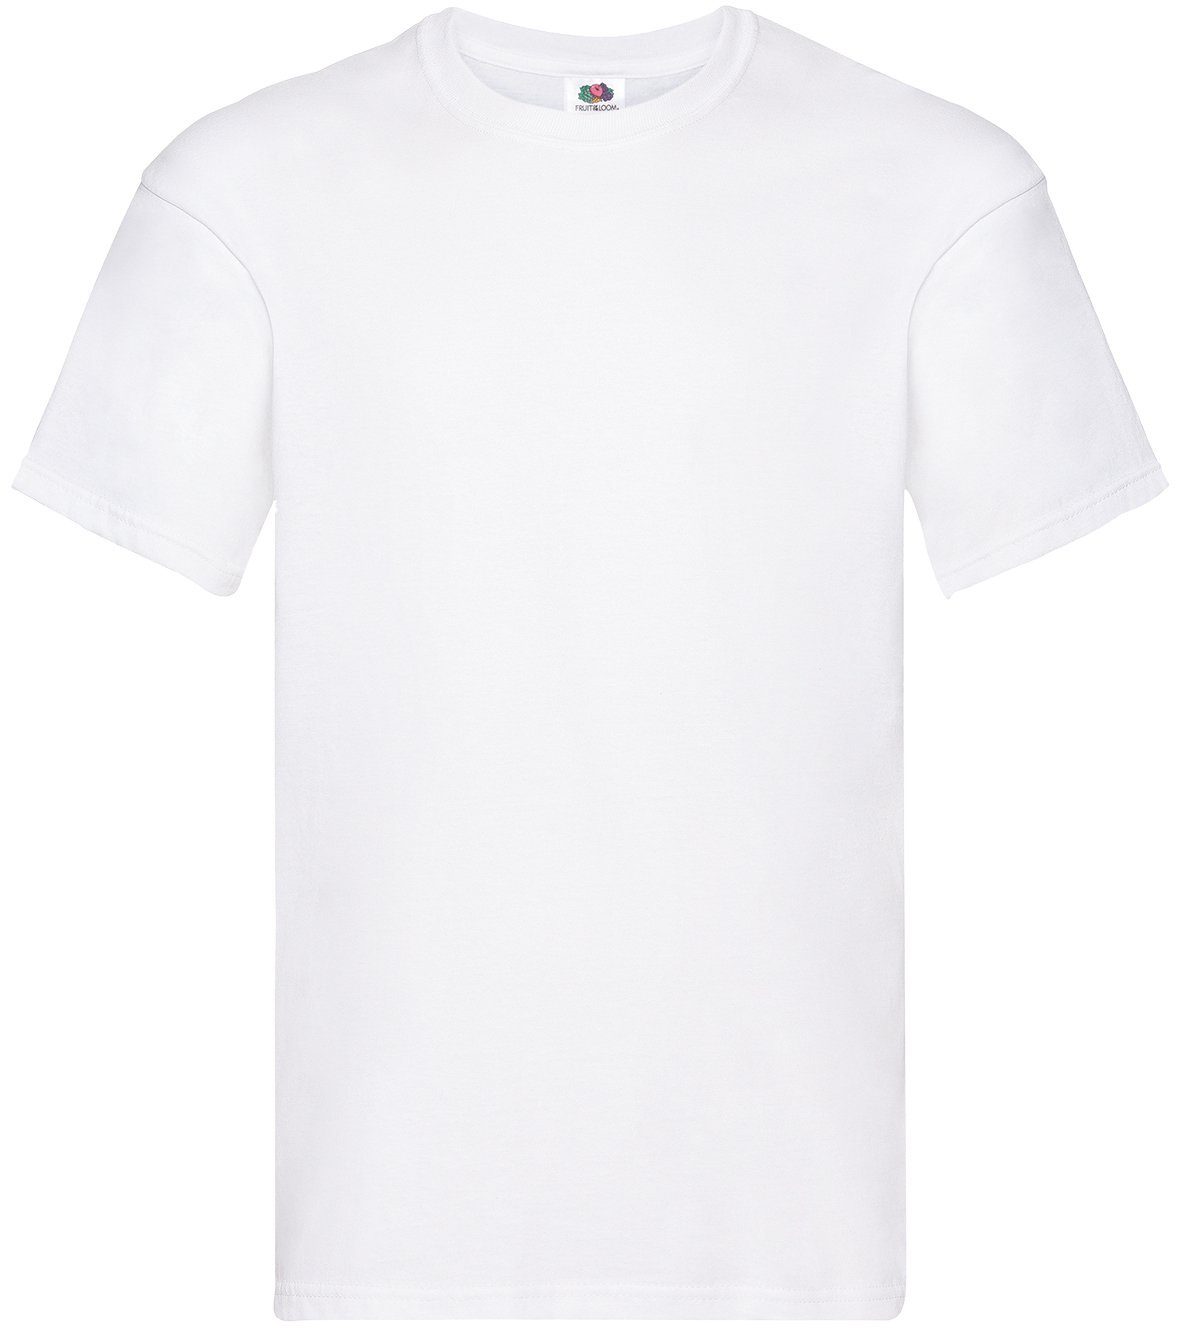 Weiß TEXXILLA T-Shirt Herren T-Shirt